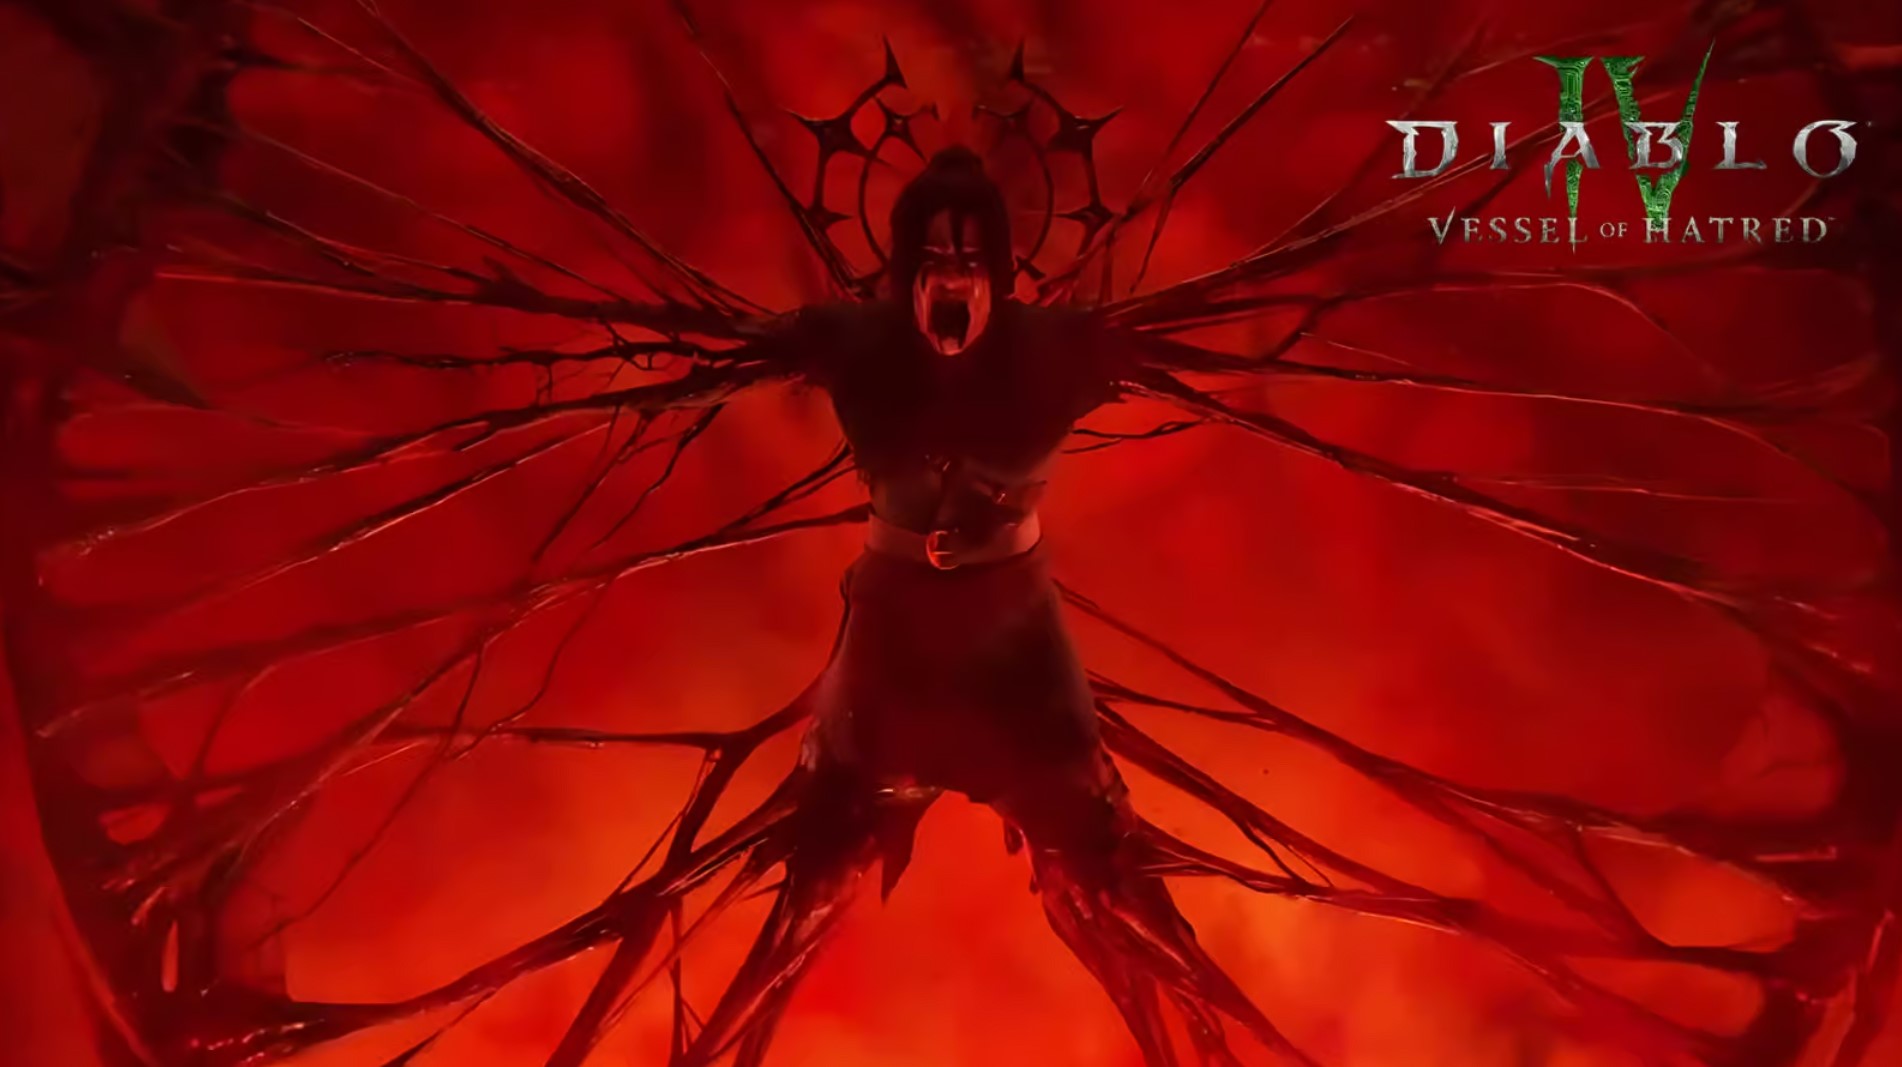 Diablo 4 - Vessel of Hatred